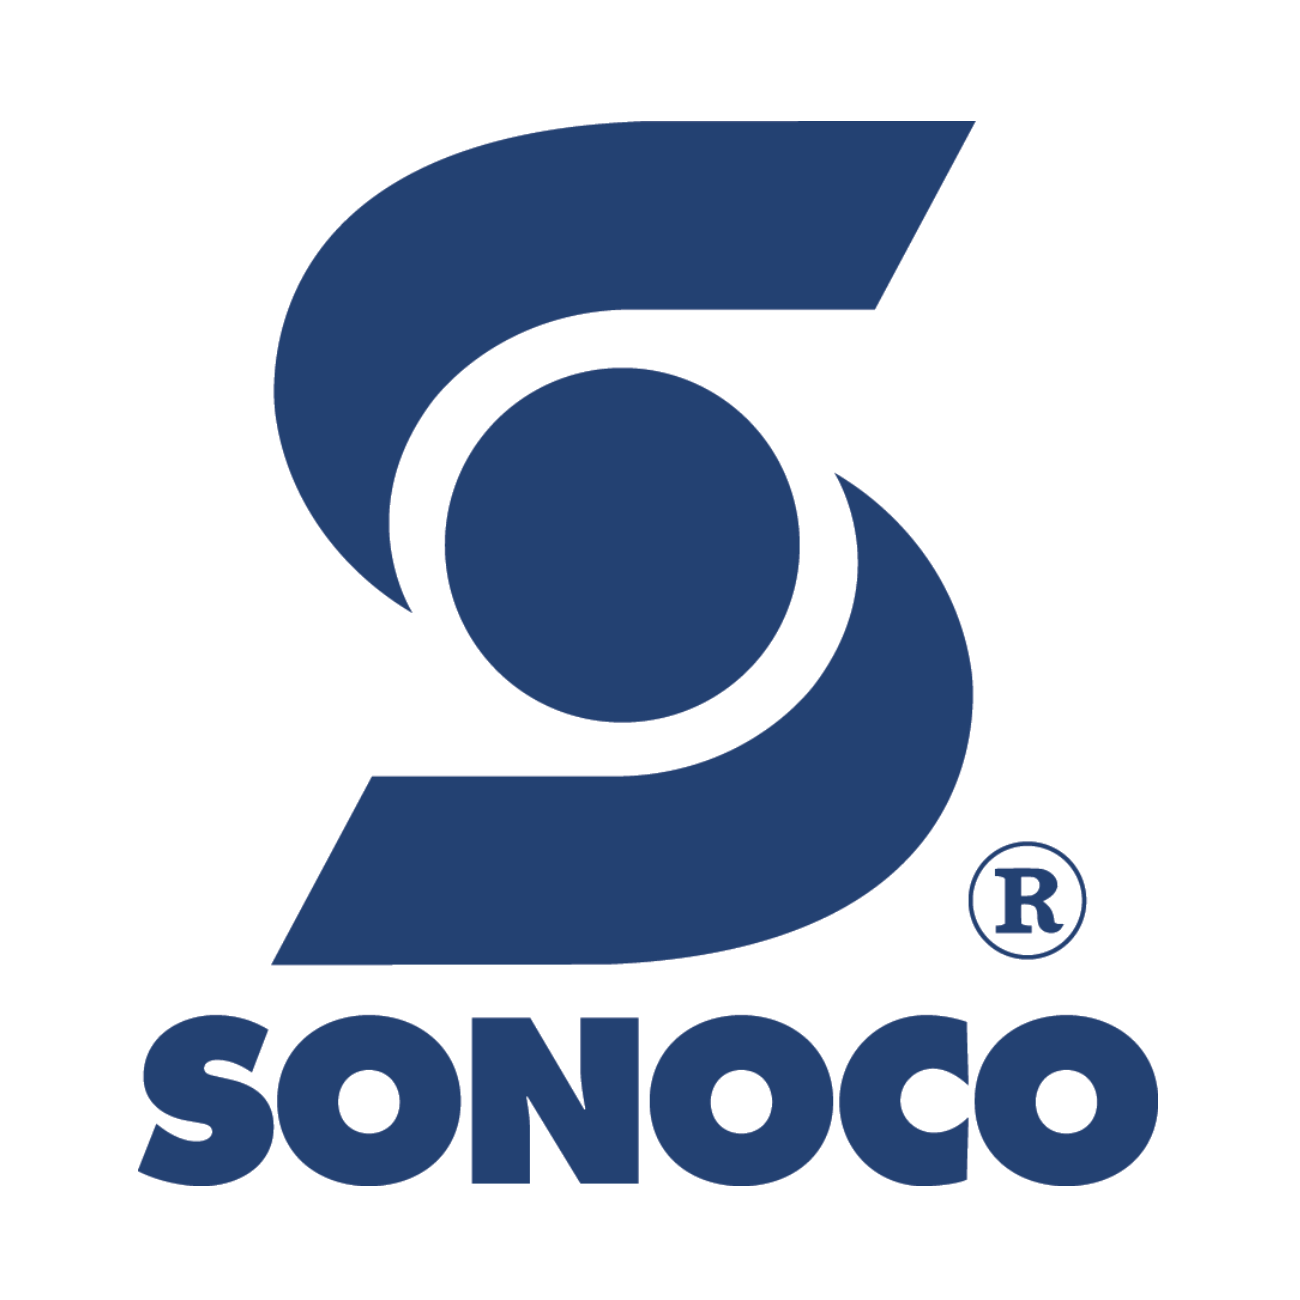 https://fame-usa.com/wp-content/uploads/2020/11/Sonoco-logo.png